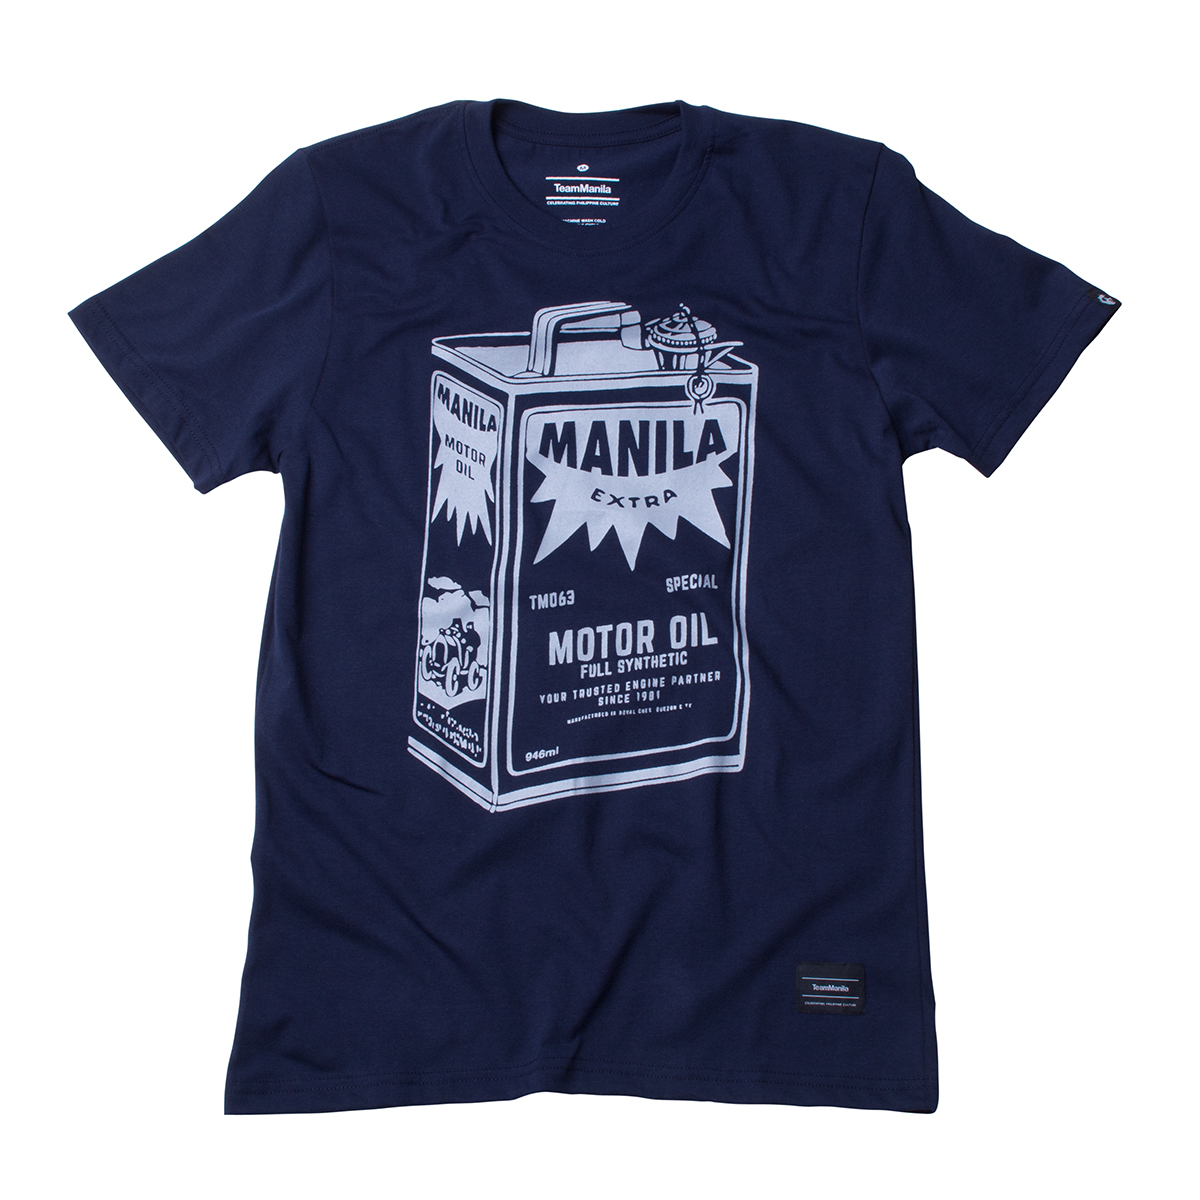 TEAM-MANILA-shirt_Aug-2014__25